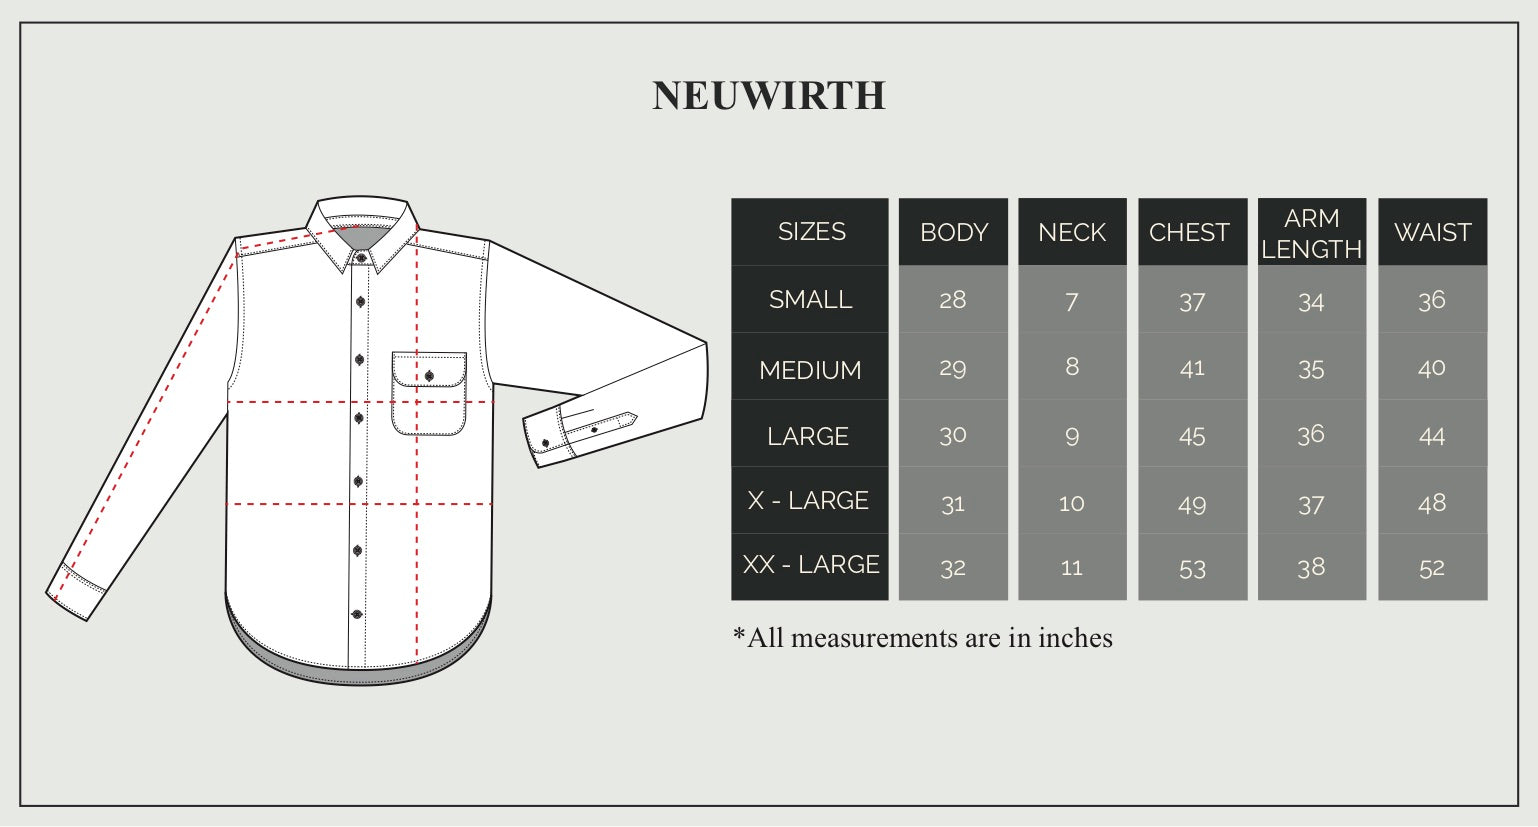 Short Sleeve Neuwirth Shirt Size Guide